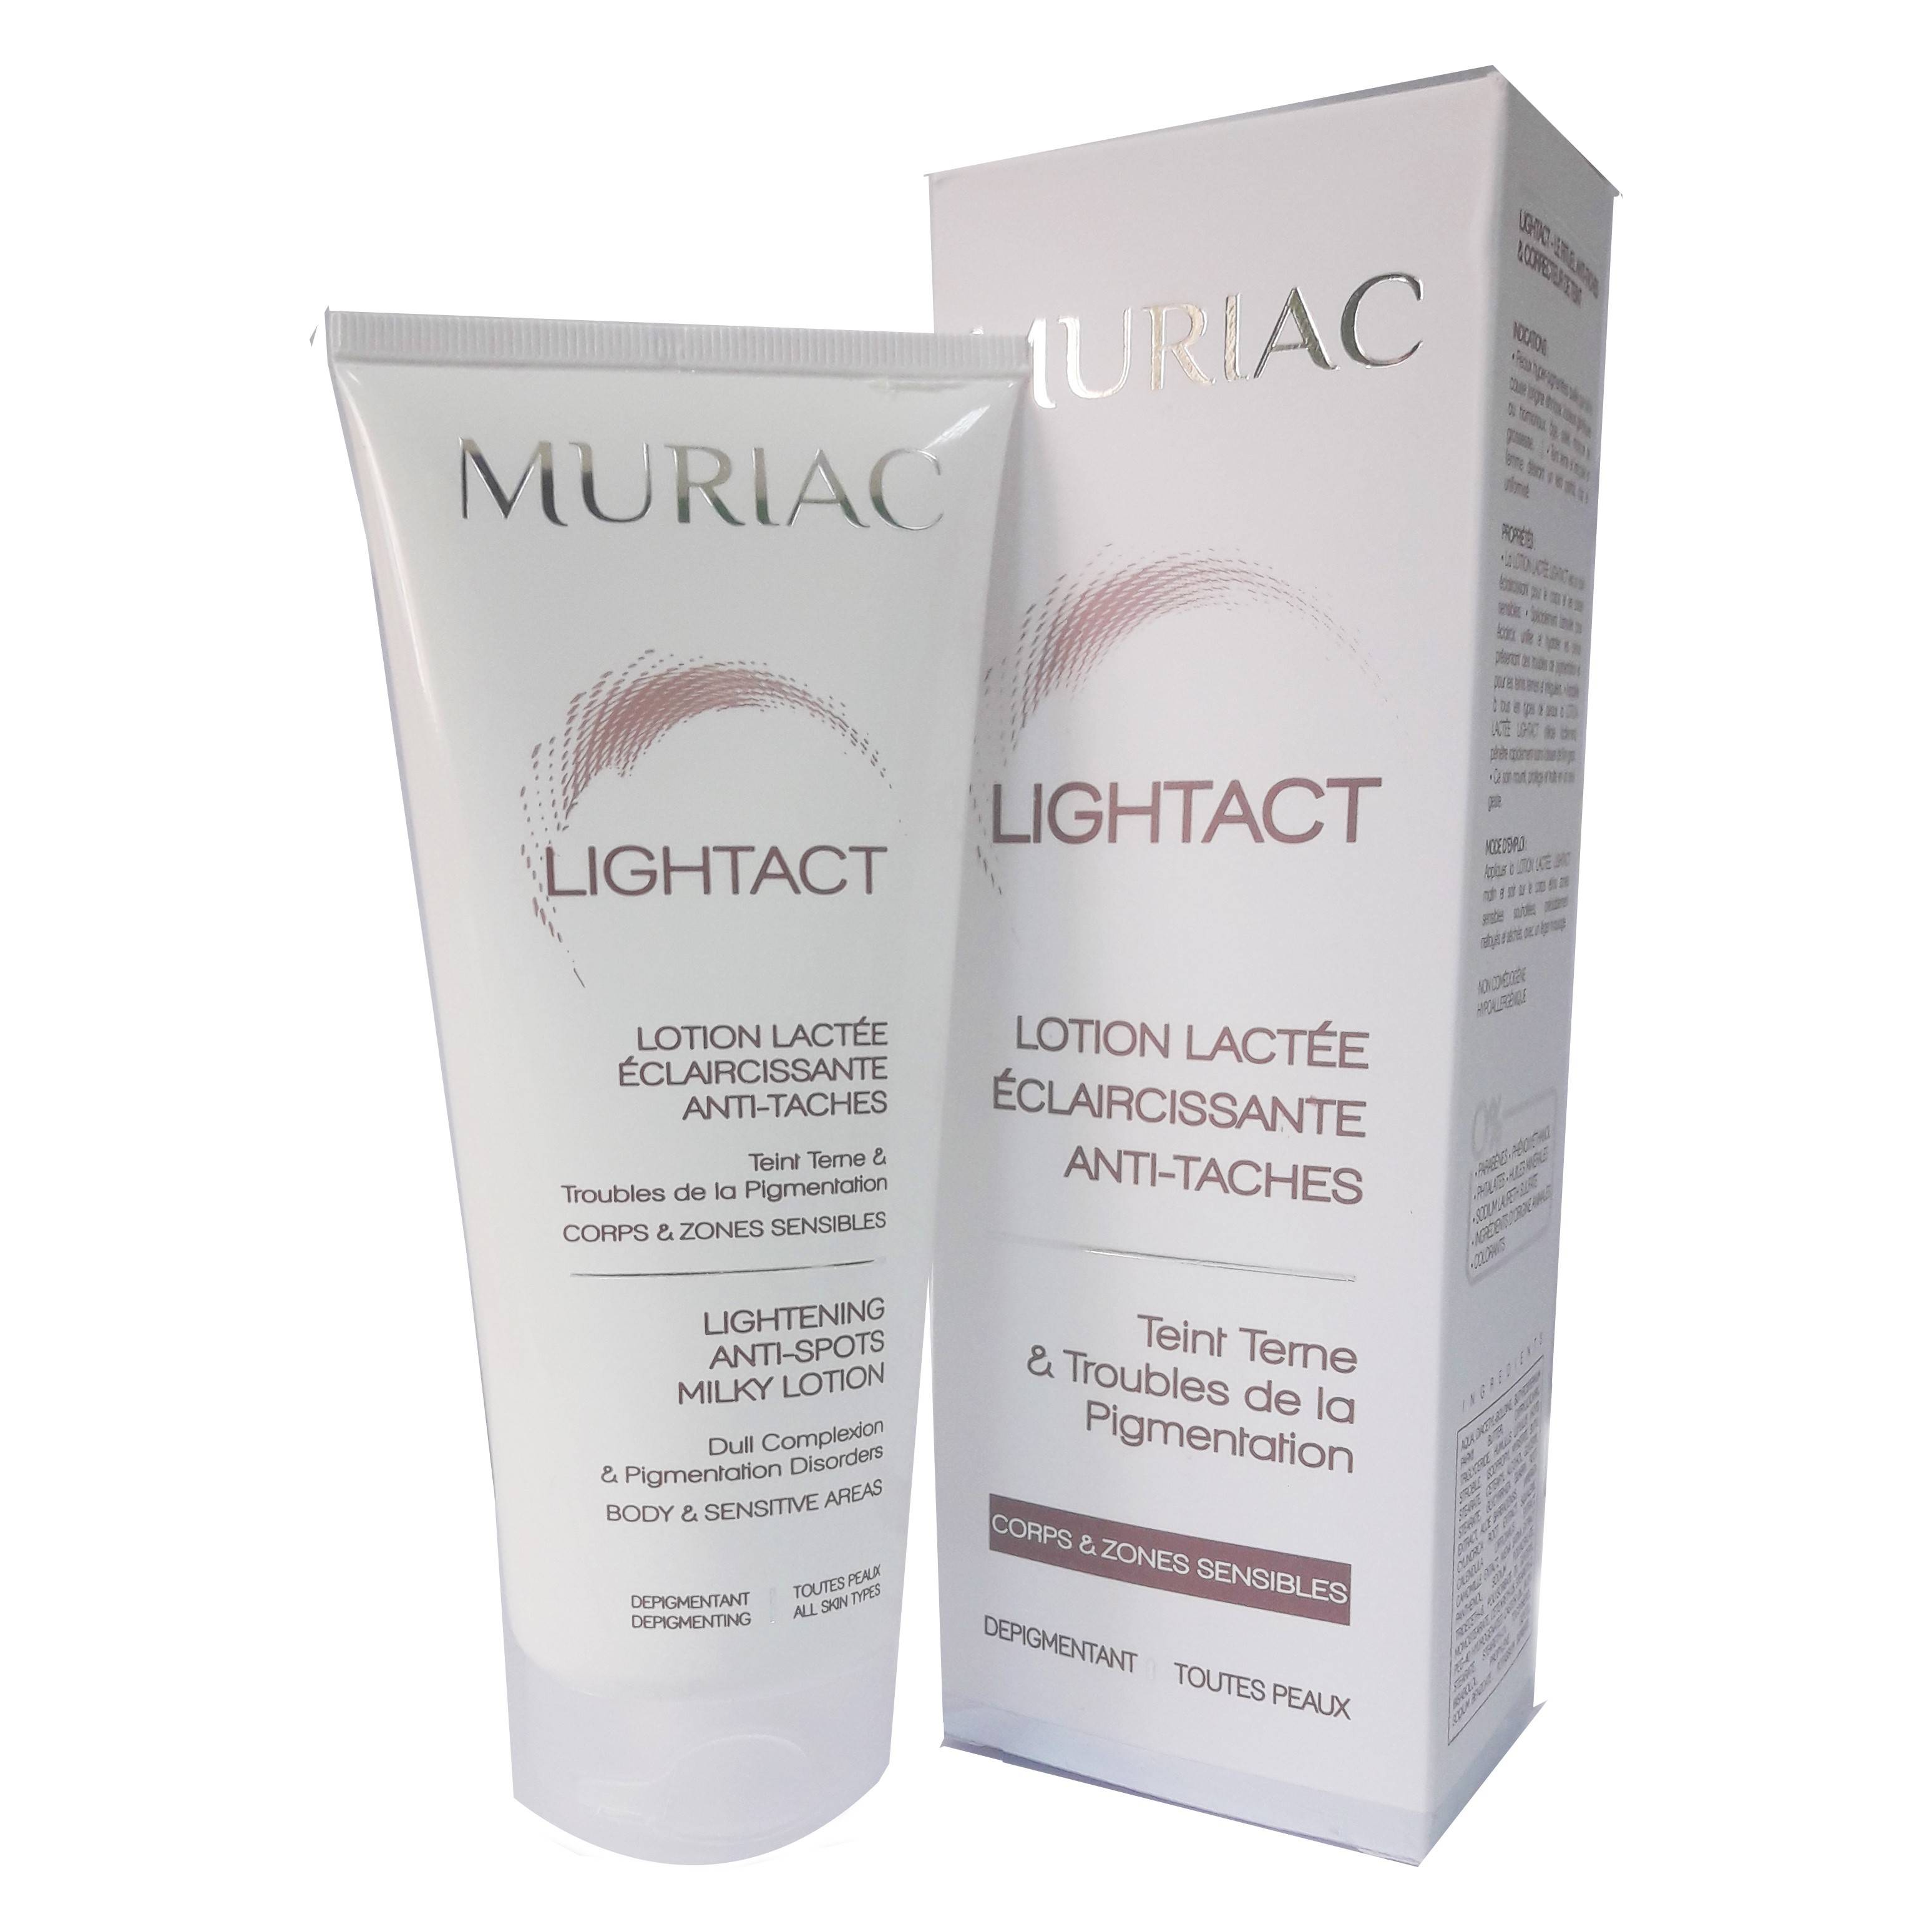 Muriac lightact lotion lactée éclaircissante anti-taches 200 ML